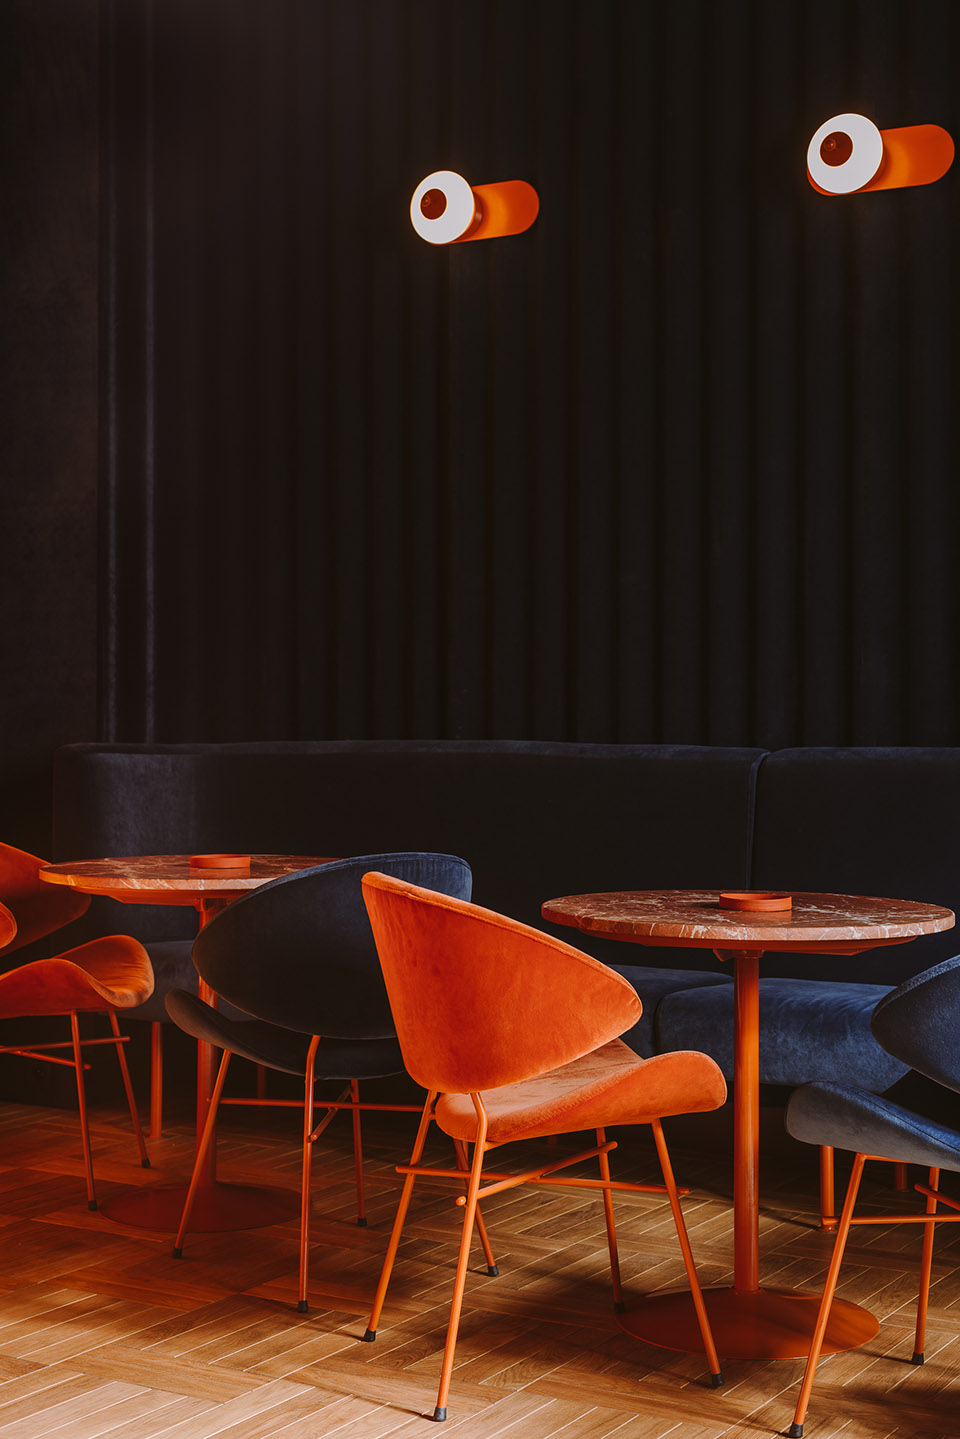 OPASLY TOM餐厅，华沙/丰富的色彩、饰面和纹理空间下的用餐体验-30